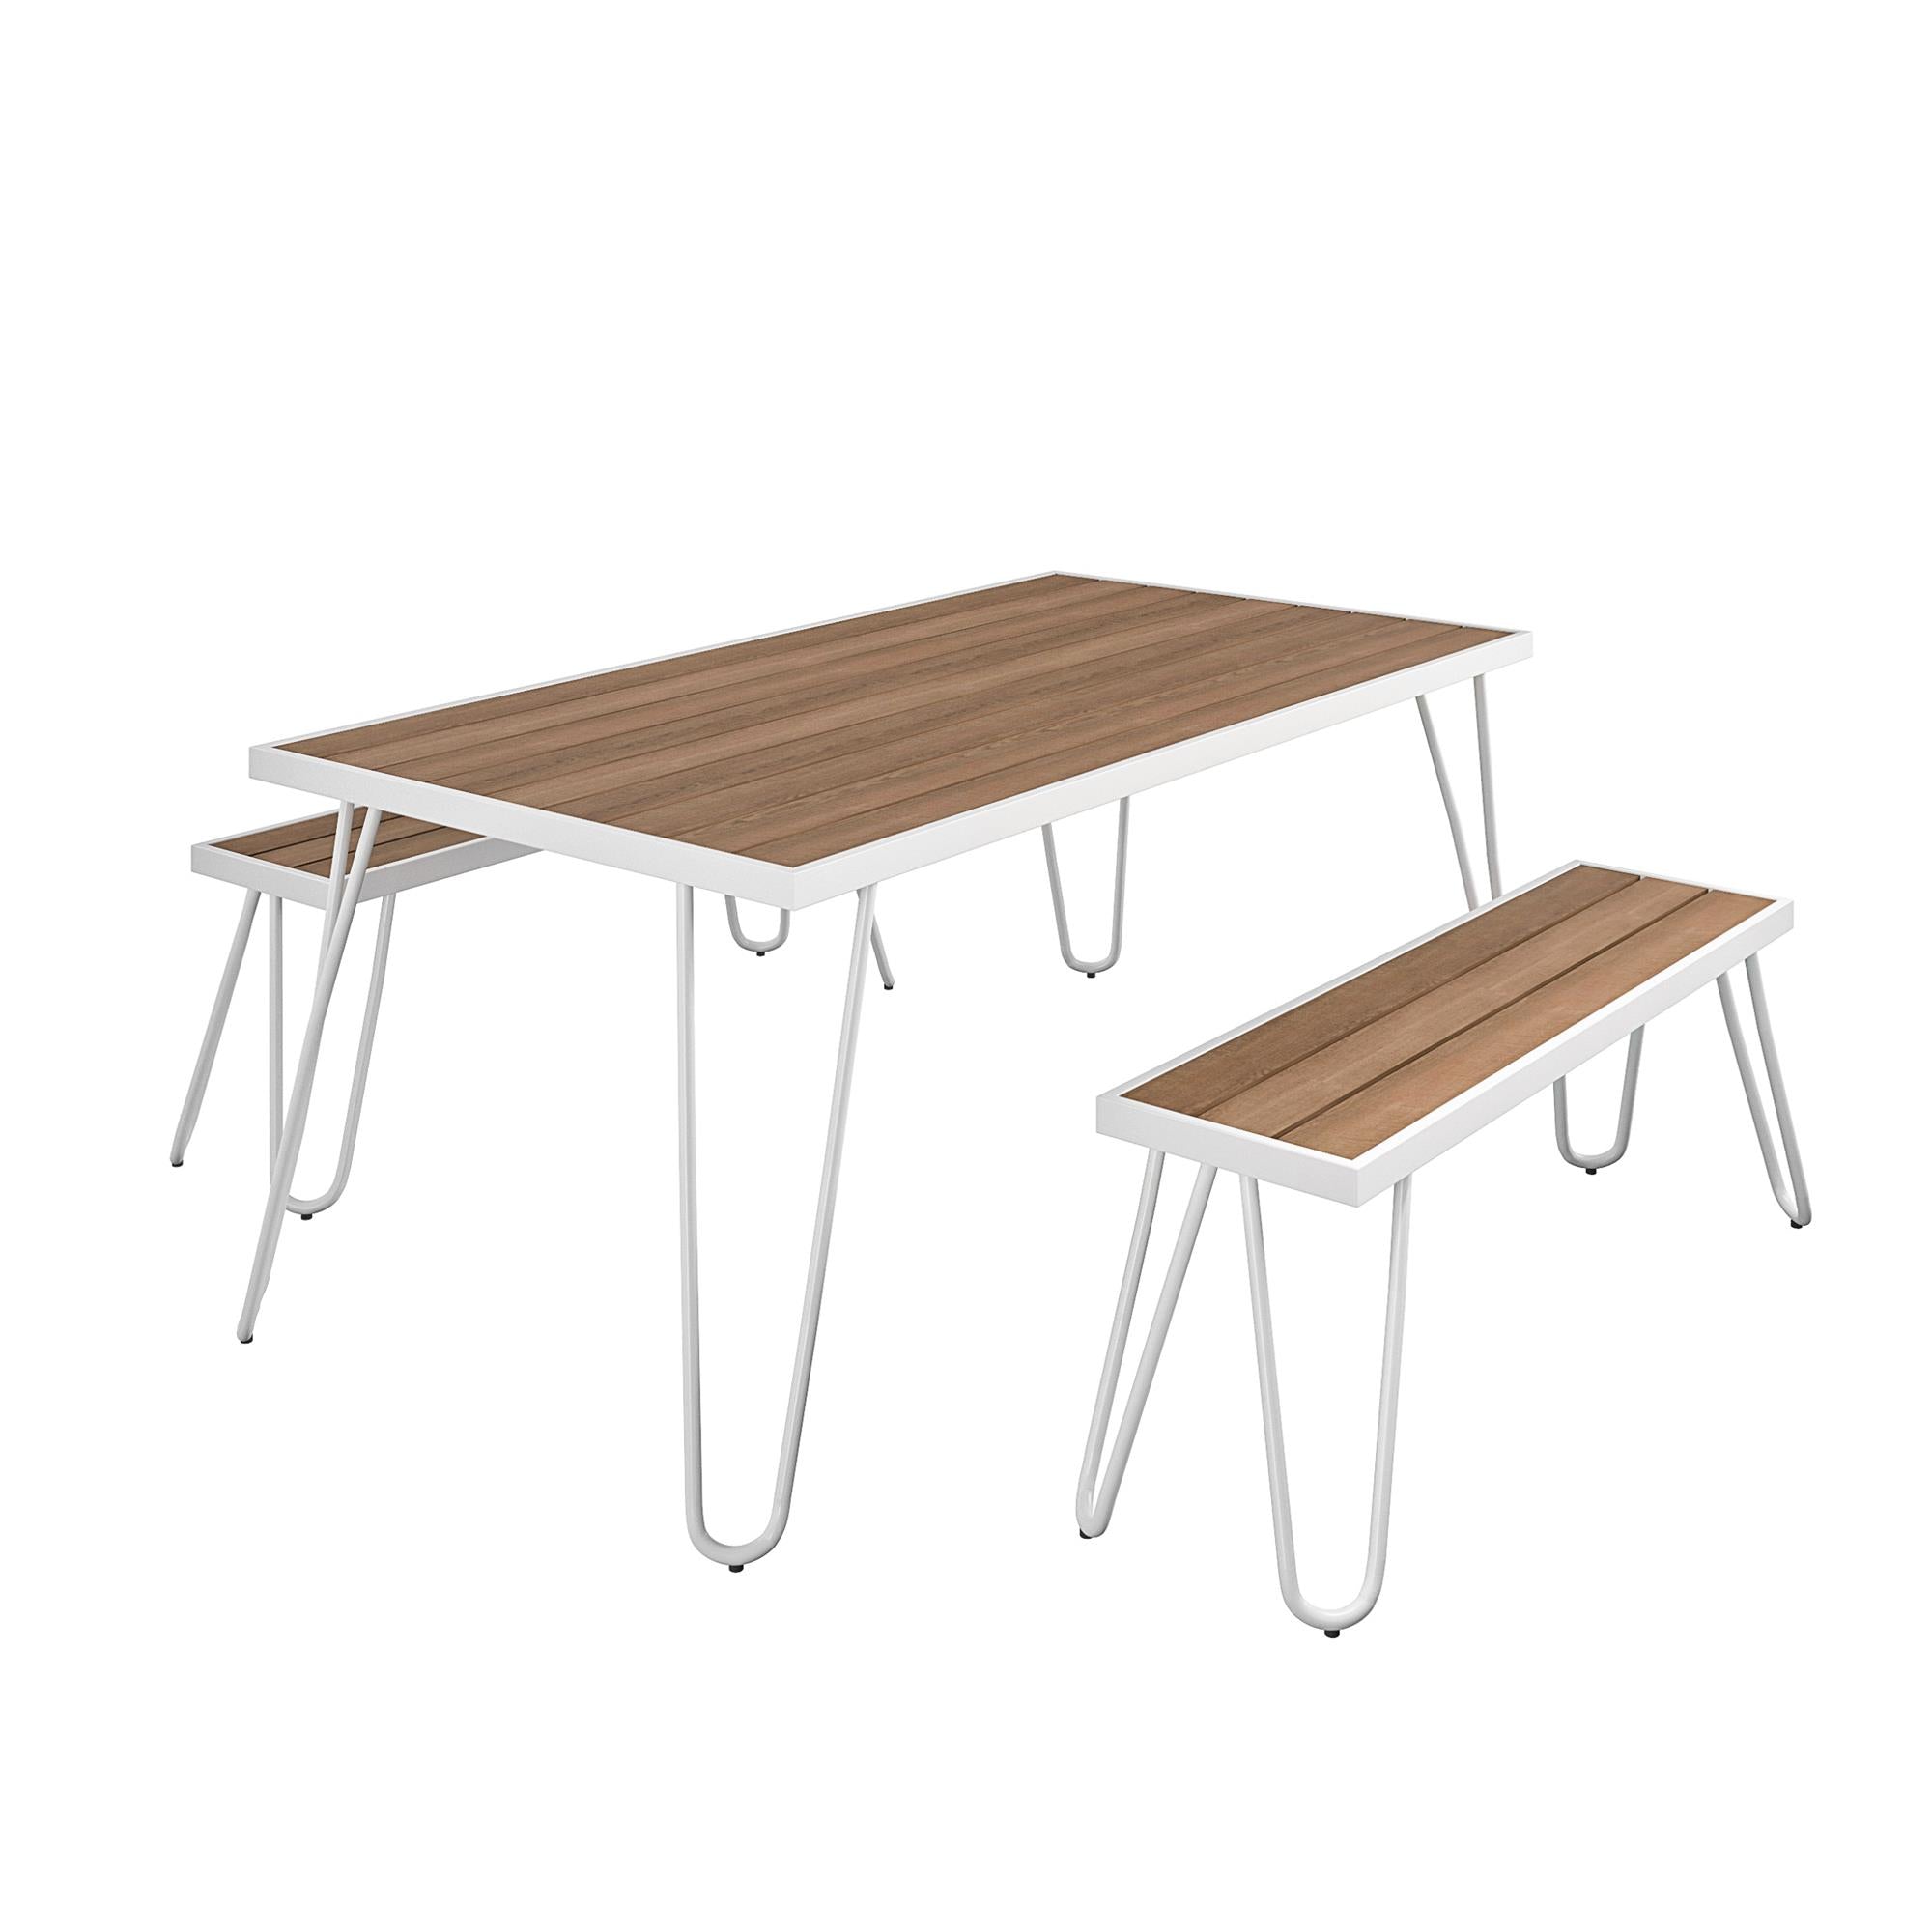 Novogratz Paulette 5' Table and Bench Set - White